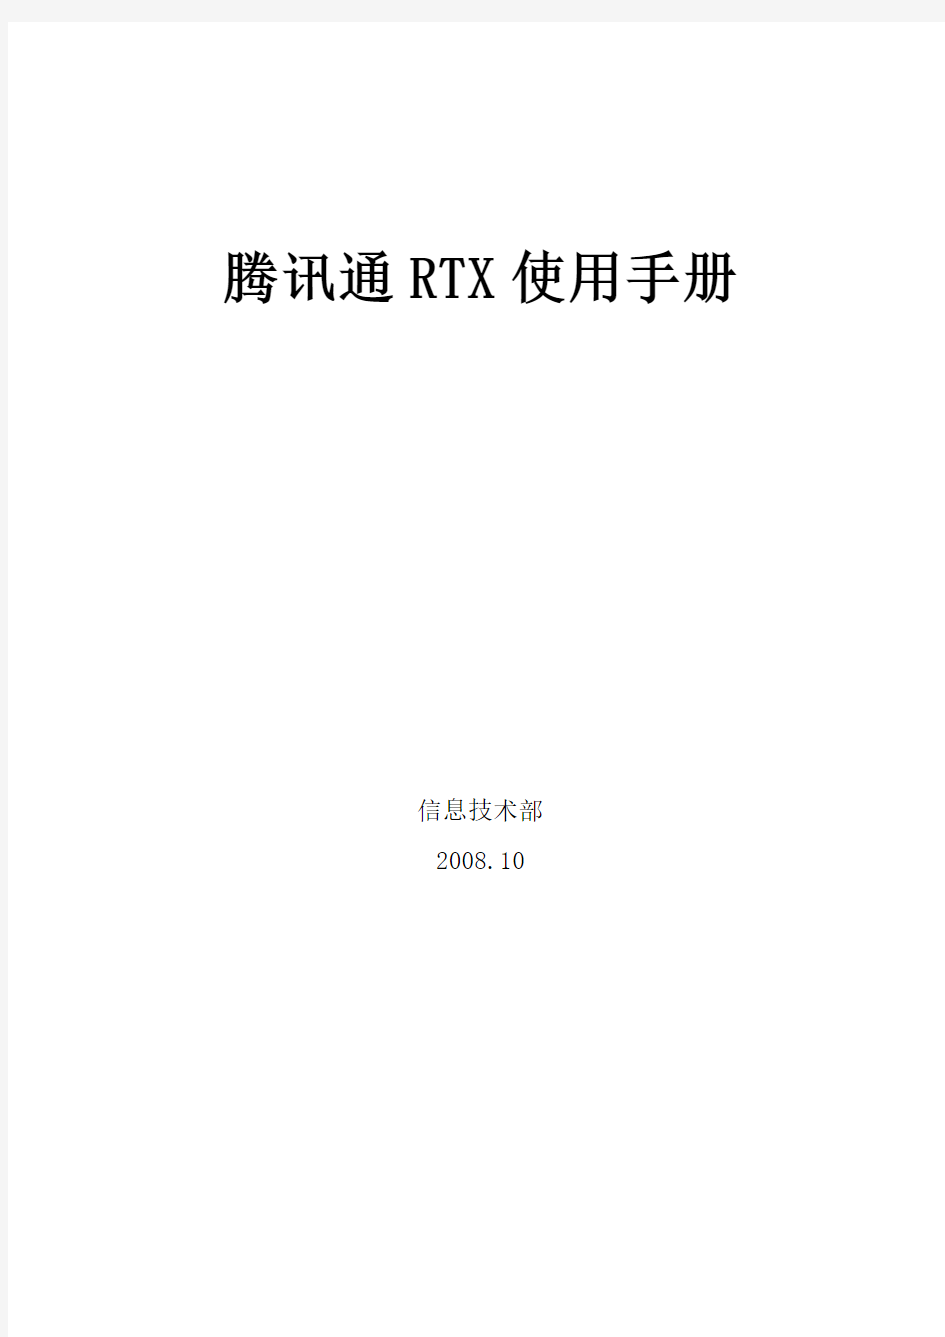 RTX使用手册